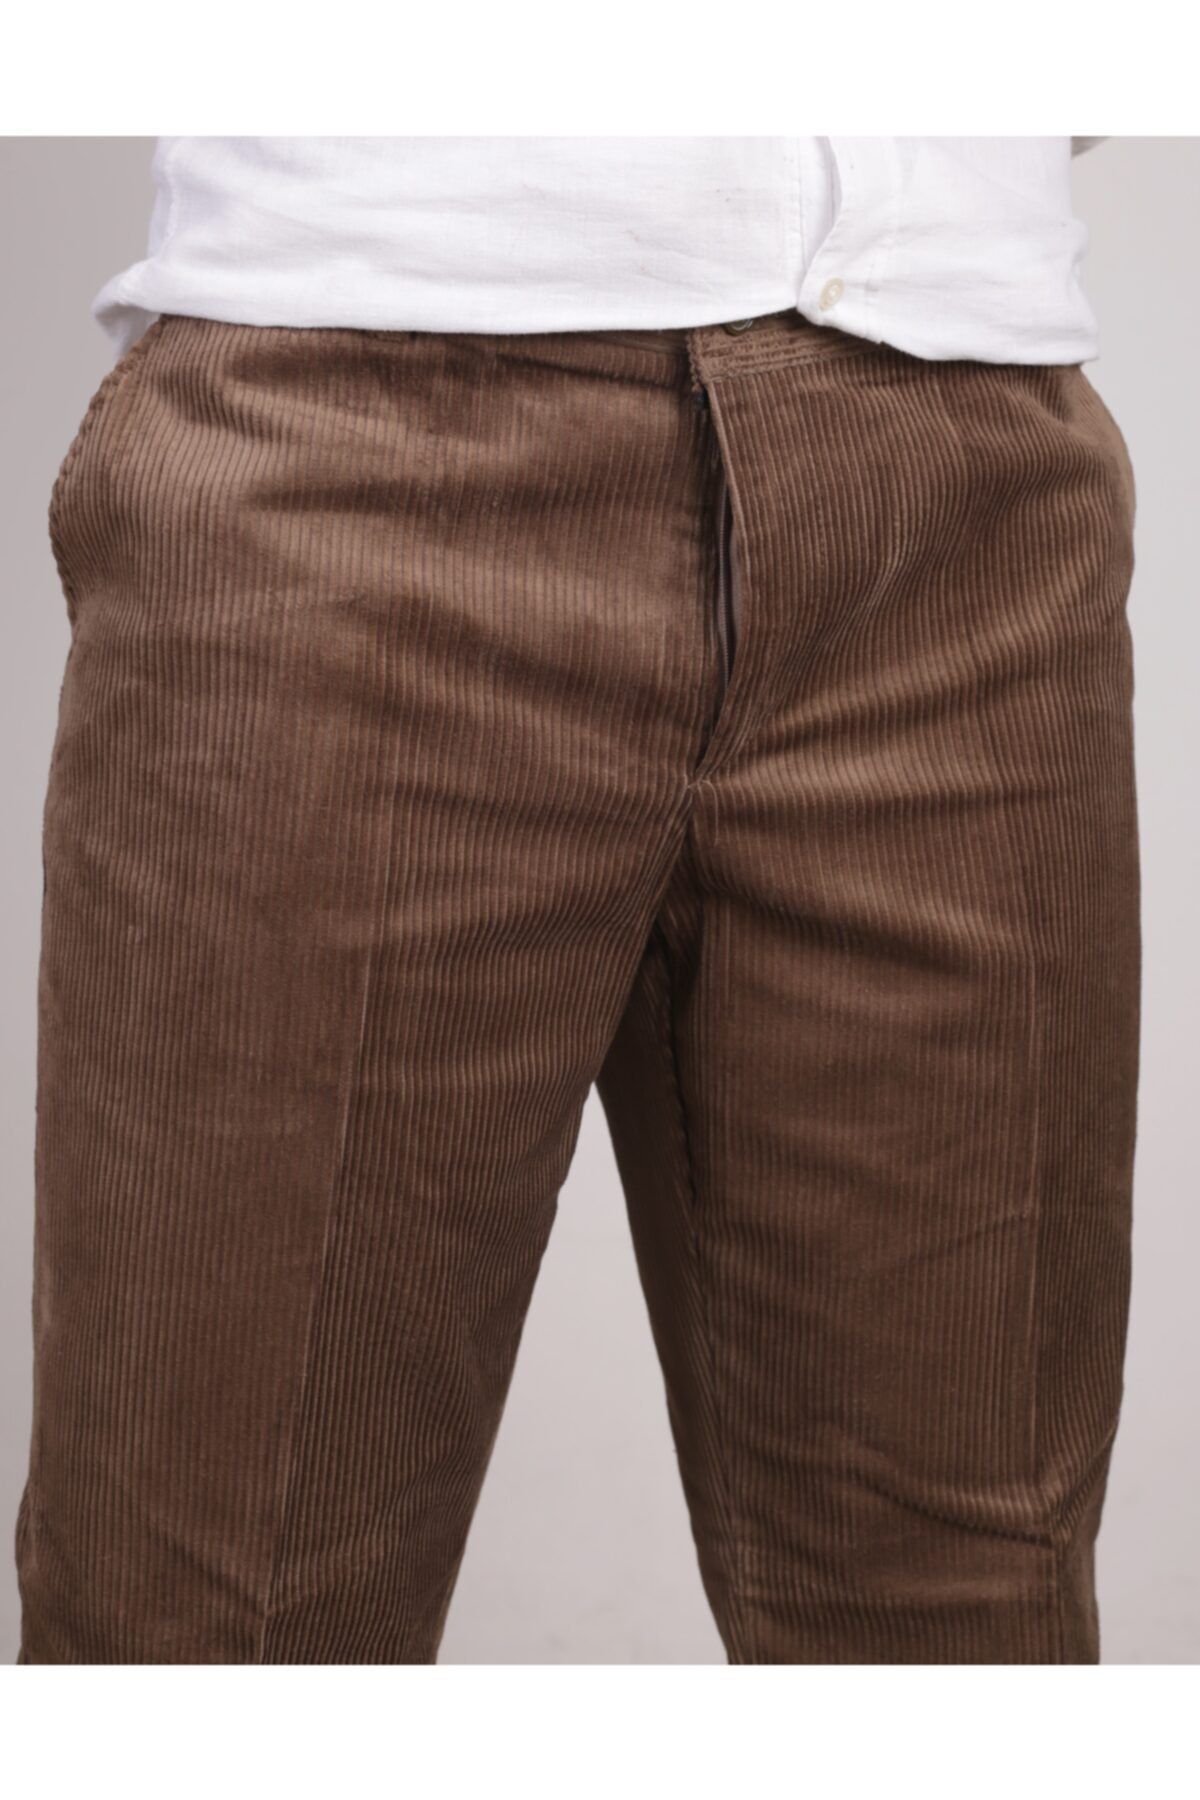 Buy Cantabil Men Light Brown Trousers Online